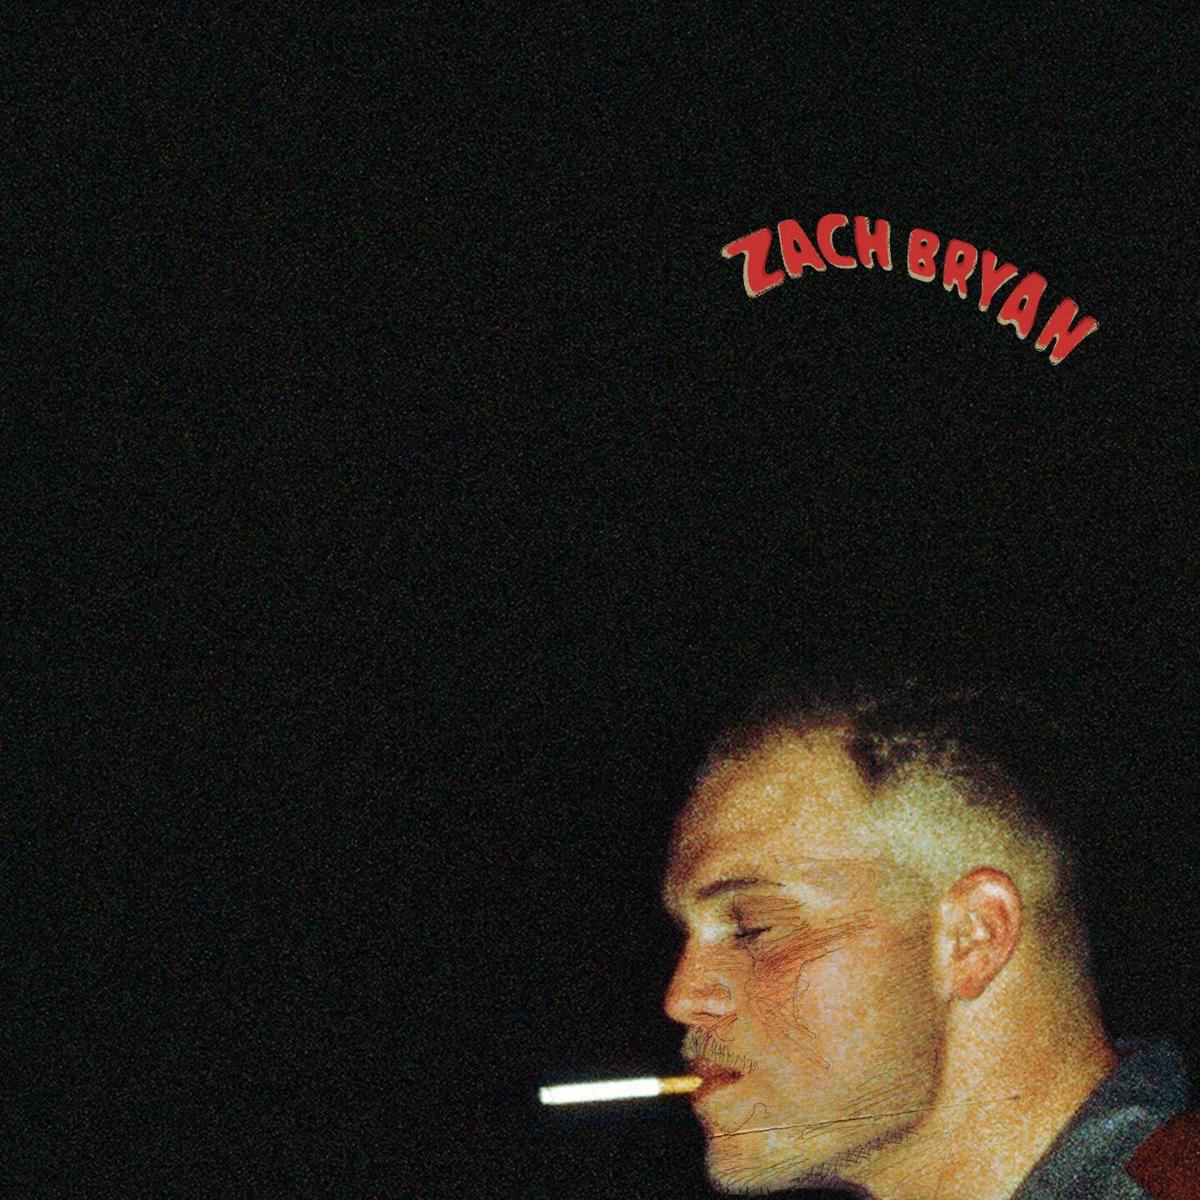 Zach Bryan Album Cover. Photo courtesy of Warner Records.